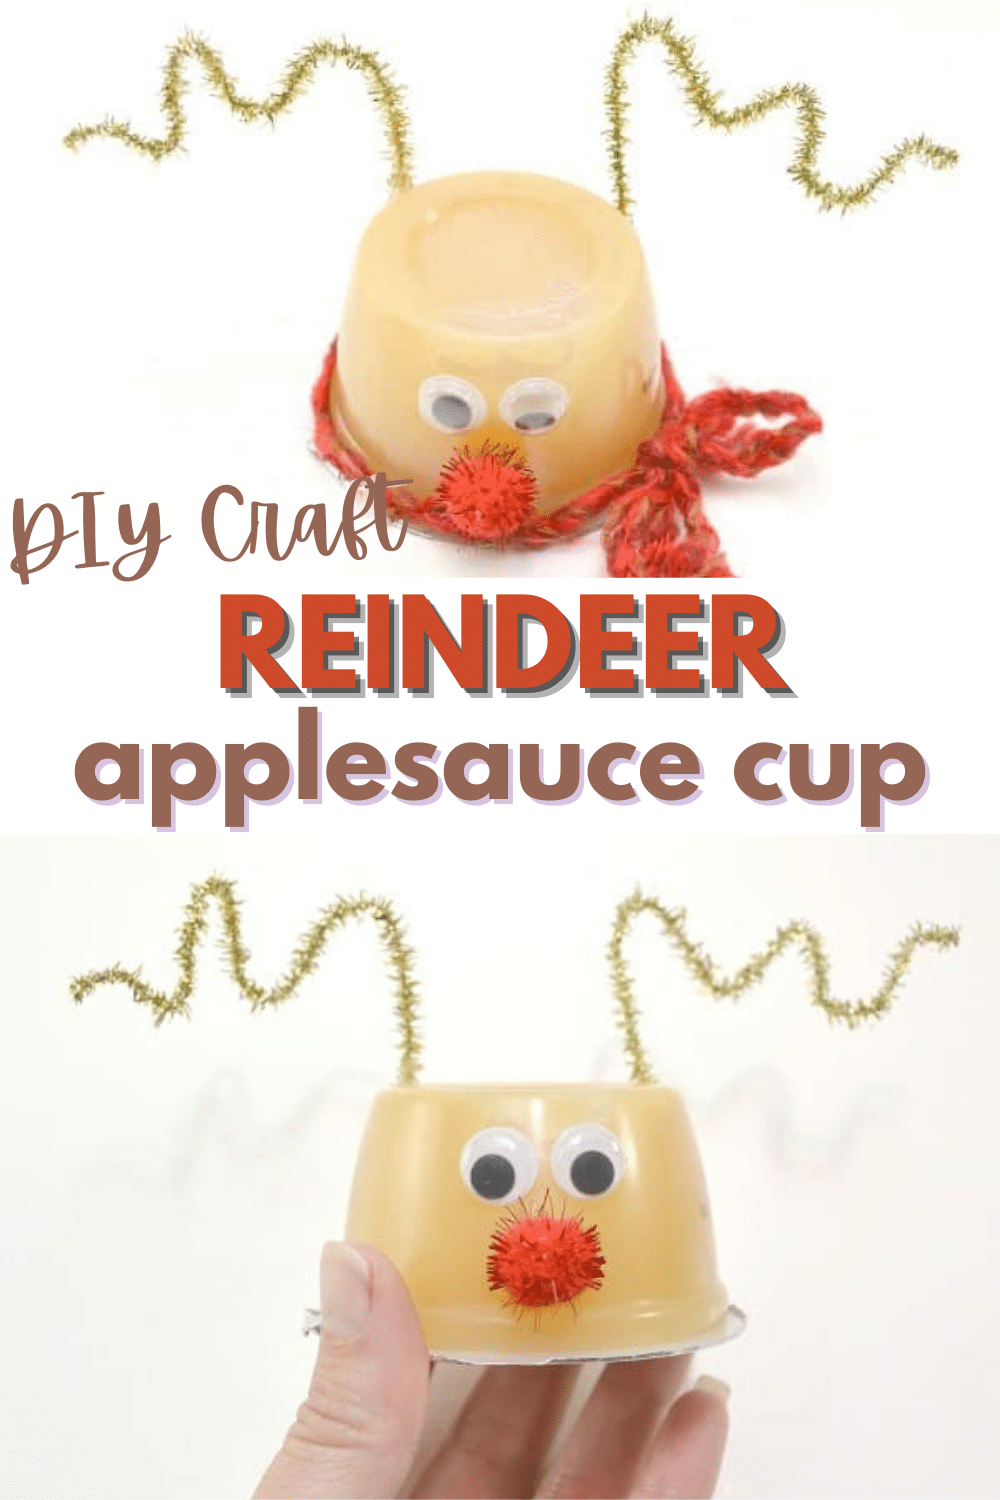 DIY reindeer applesauce cup.